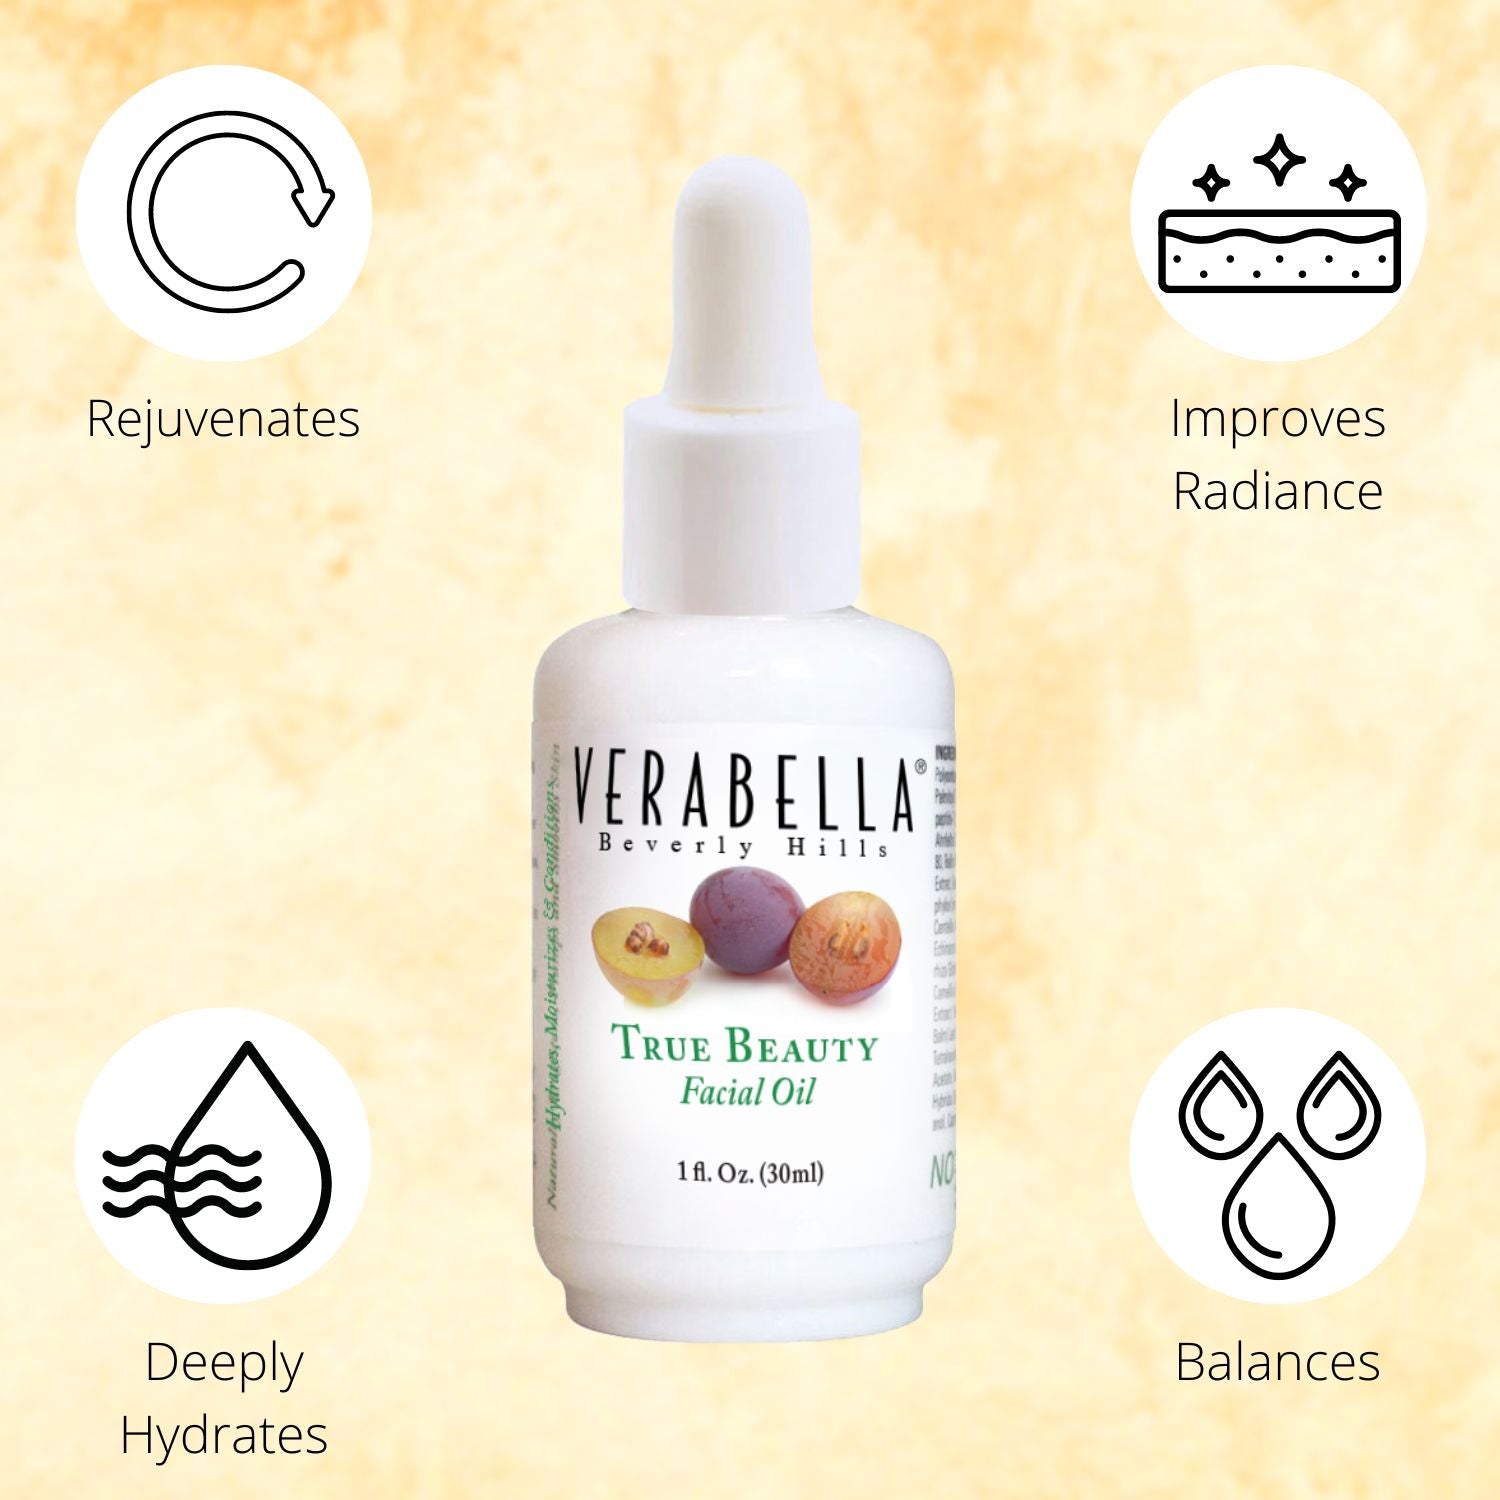 Verabella True Beauty Facial Oil balances, rejuvenates, and improves radiance